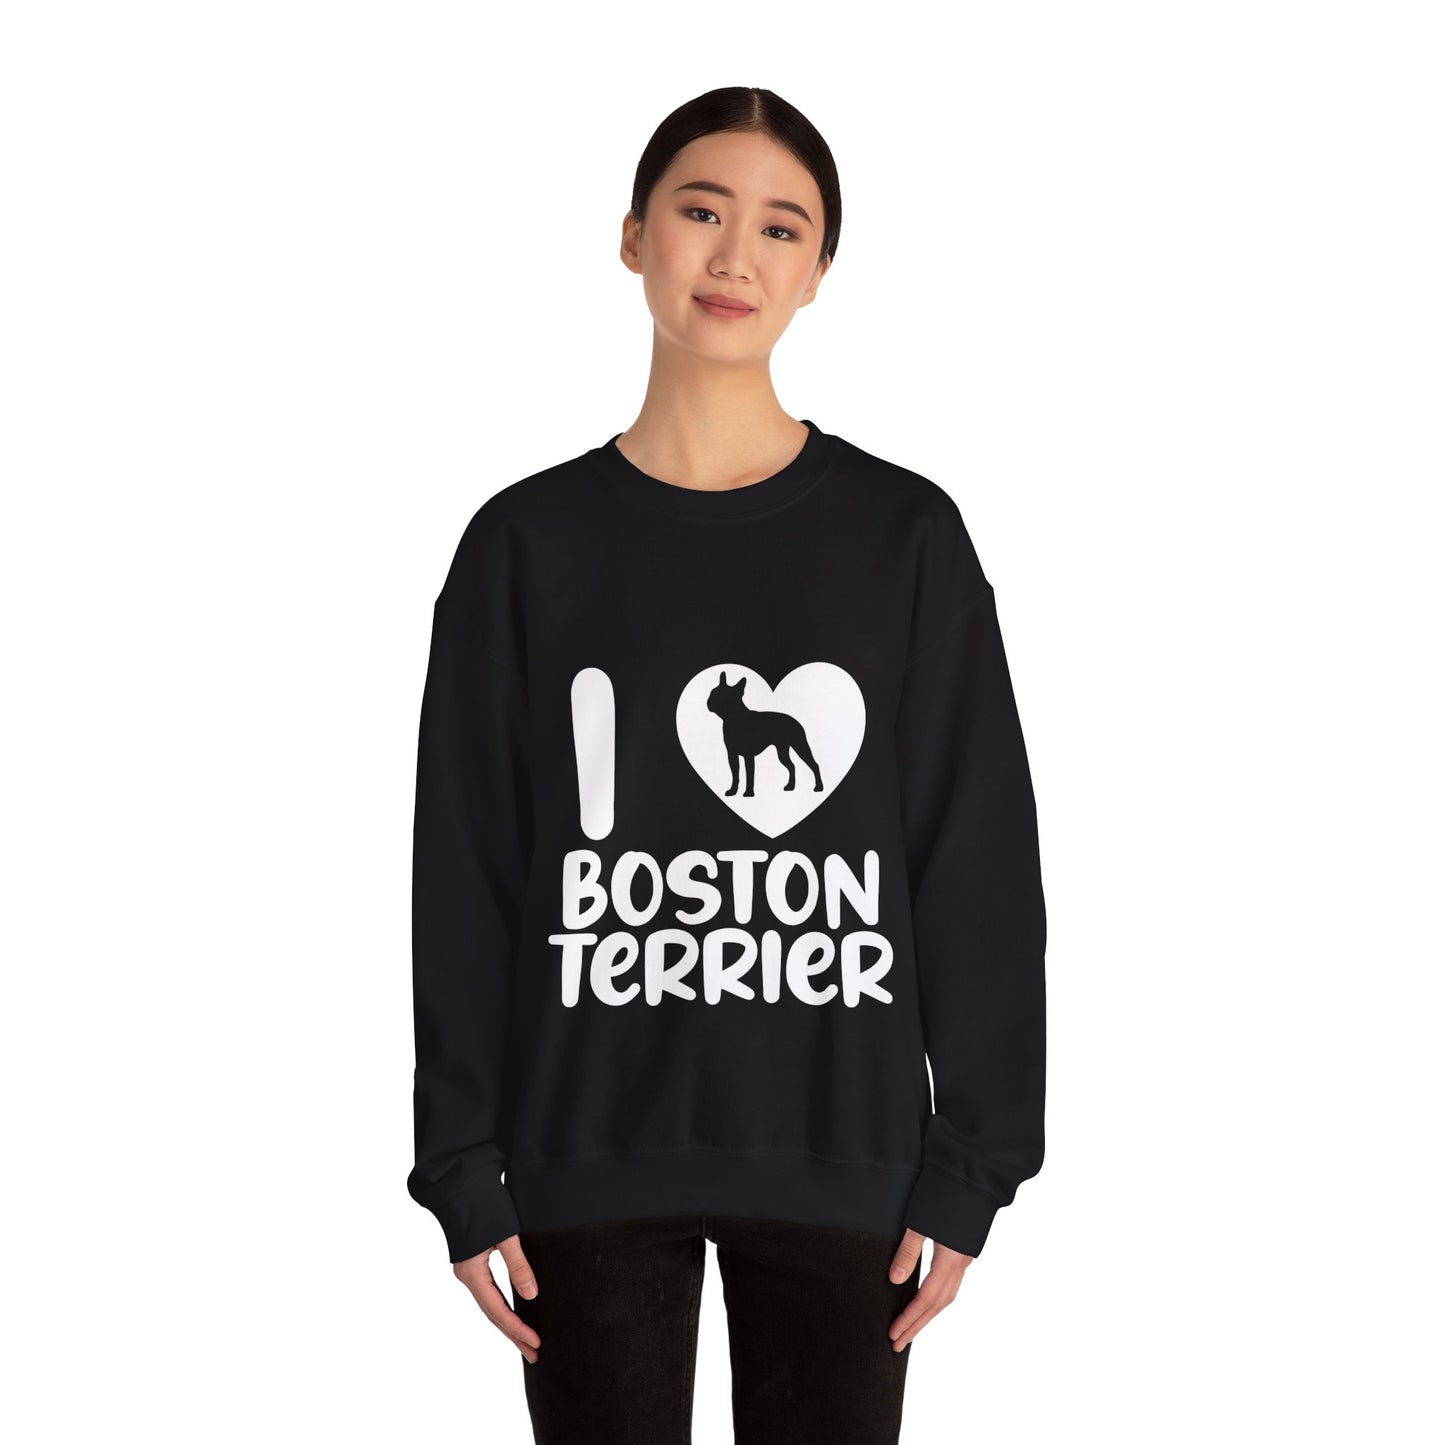 Meeko - Unisex Sweatshirt for Boston Terrier lovers